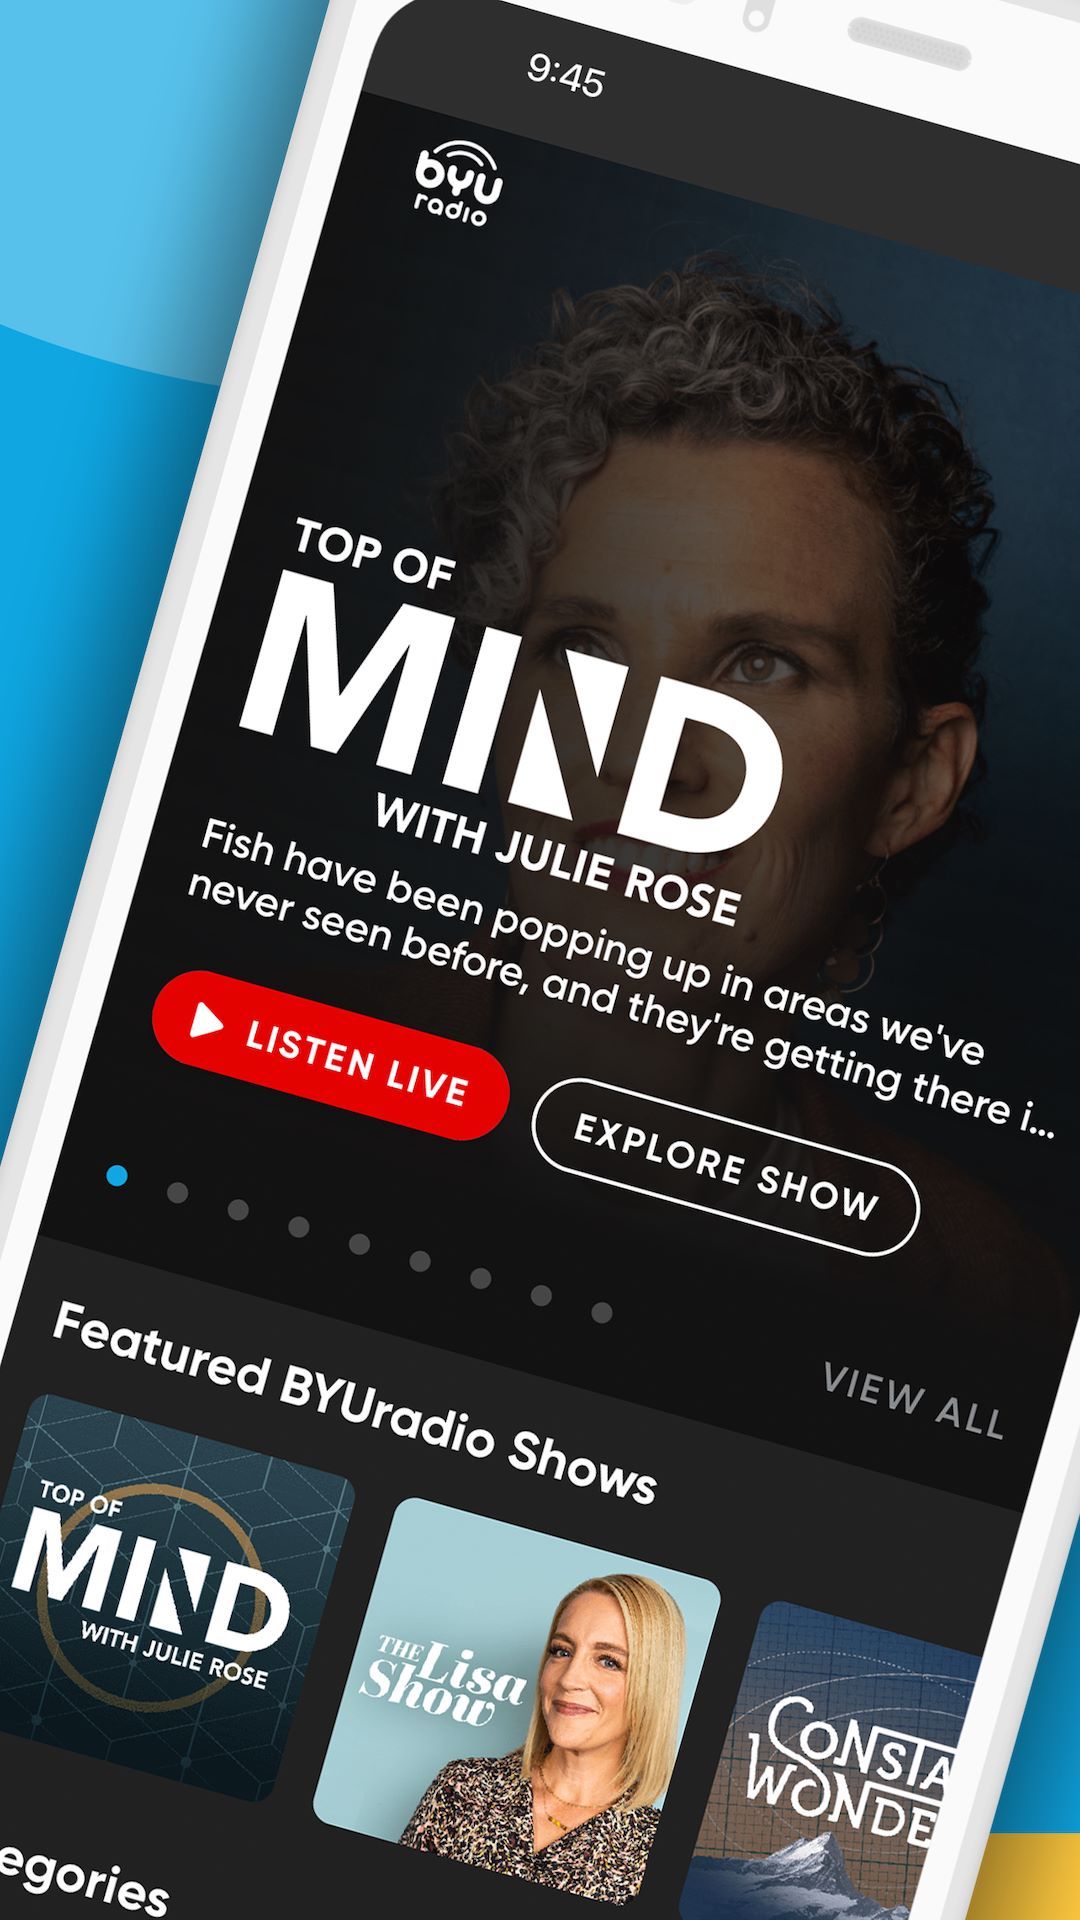 BYUradio - Family Podcast App